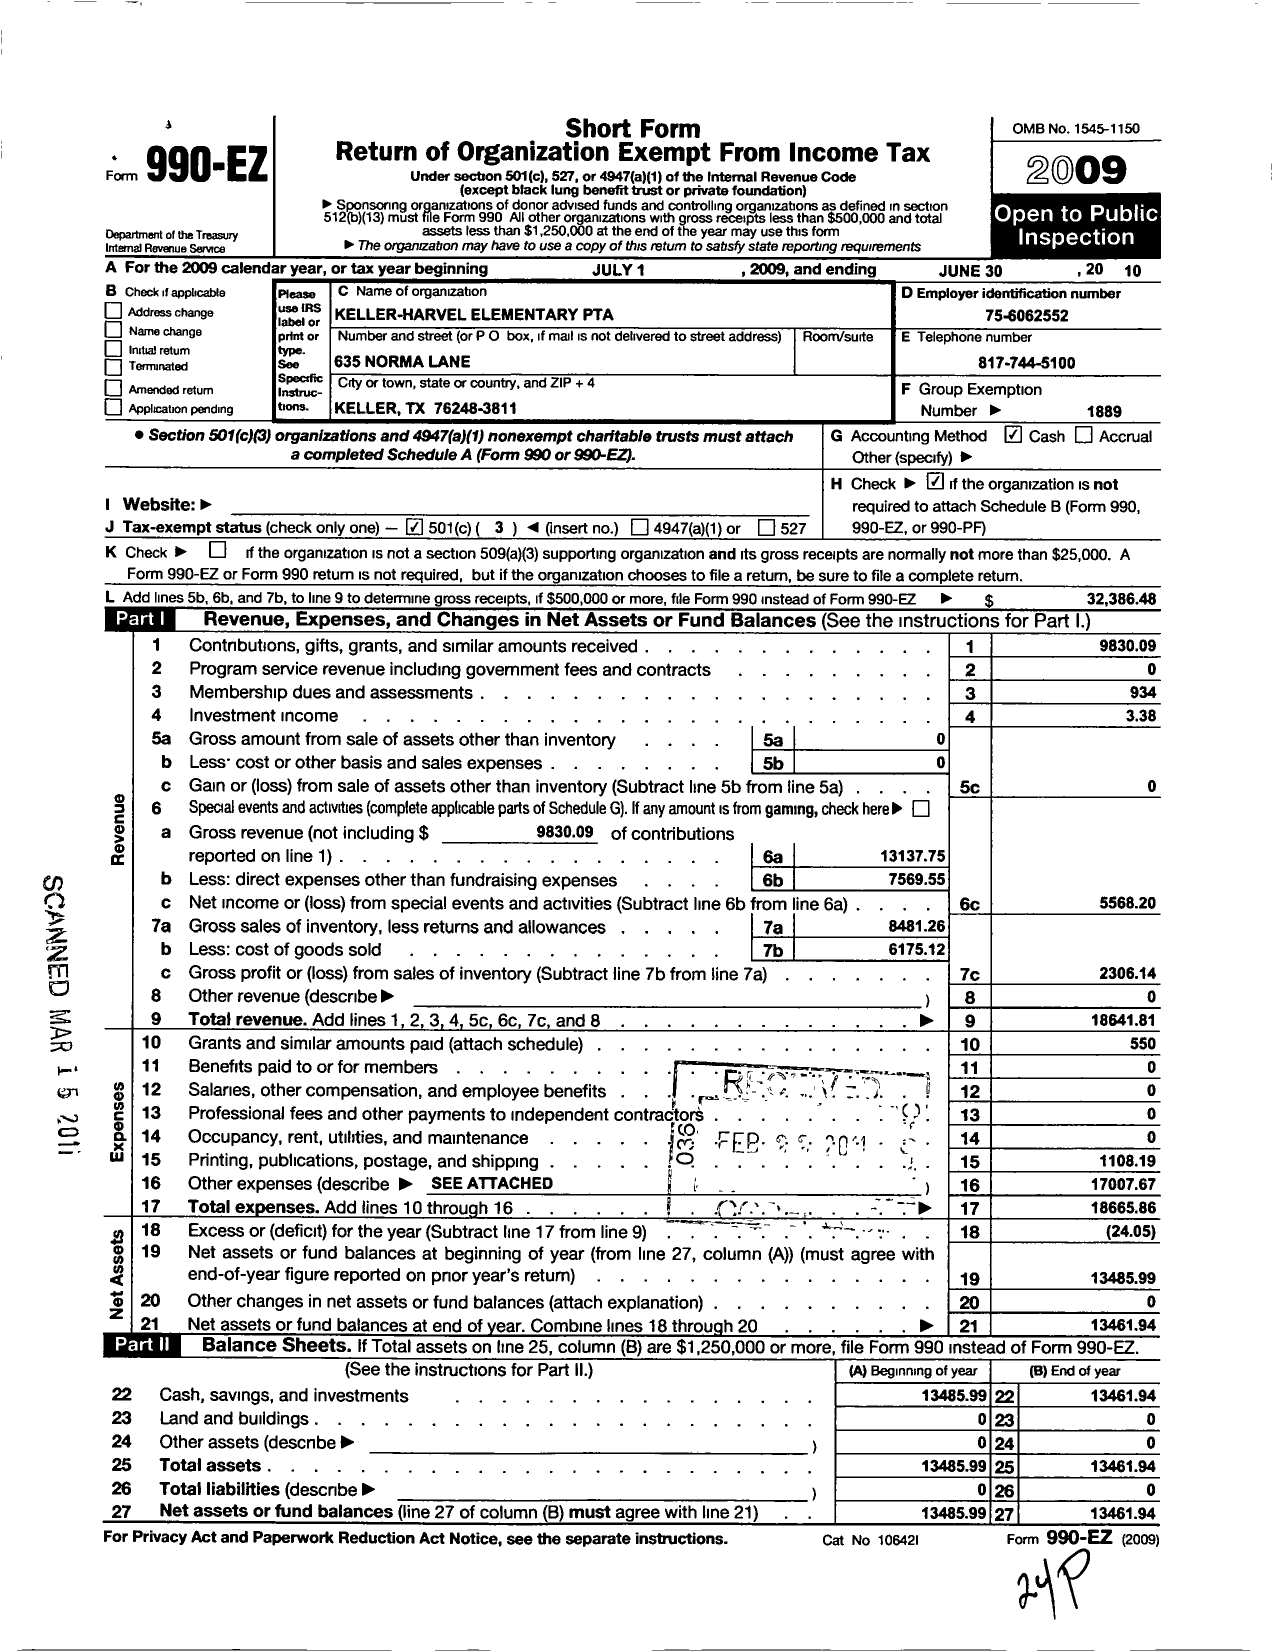 Image of first page of 2009 Form 990EZ for TEXAS PTA - 5712 Keller-Harvel PTA